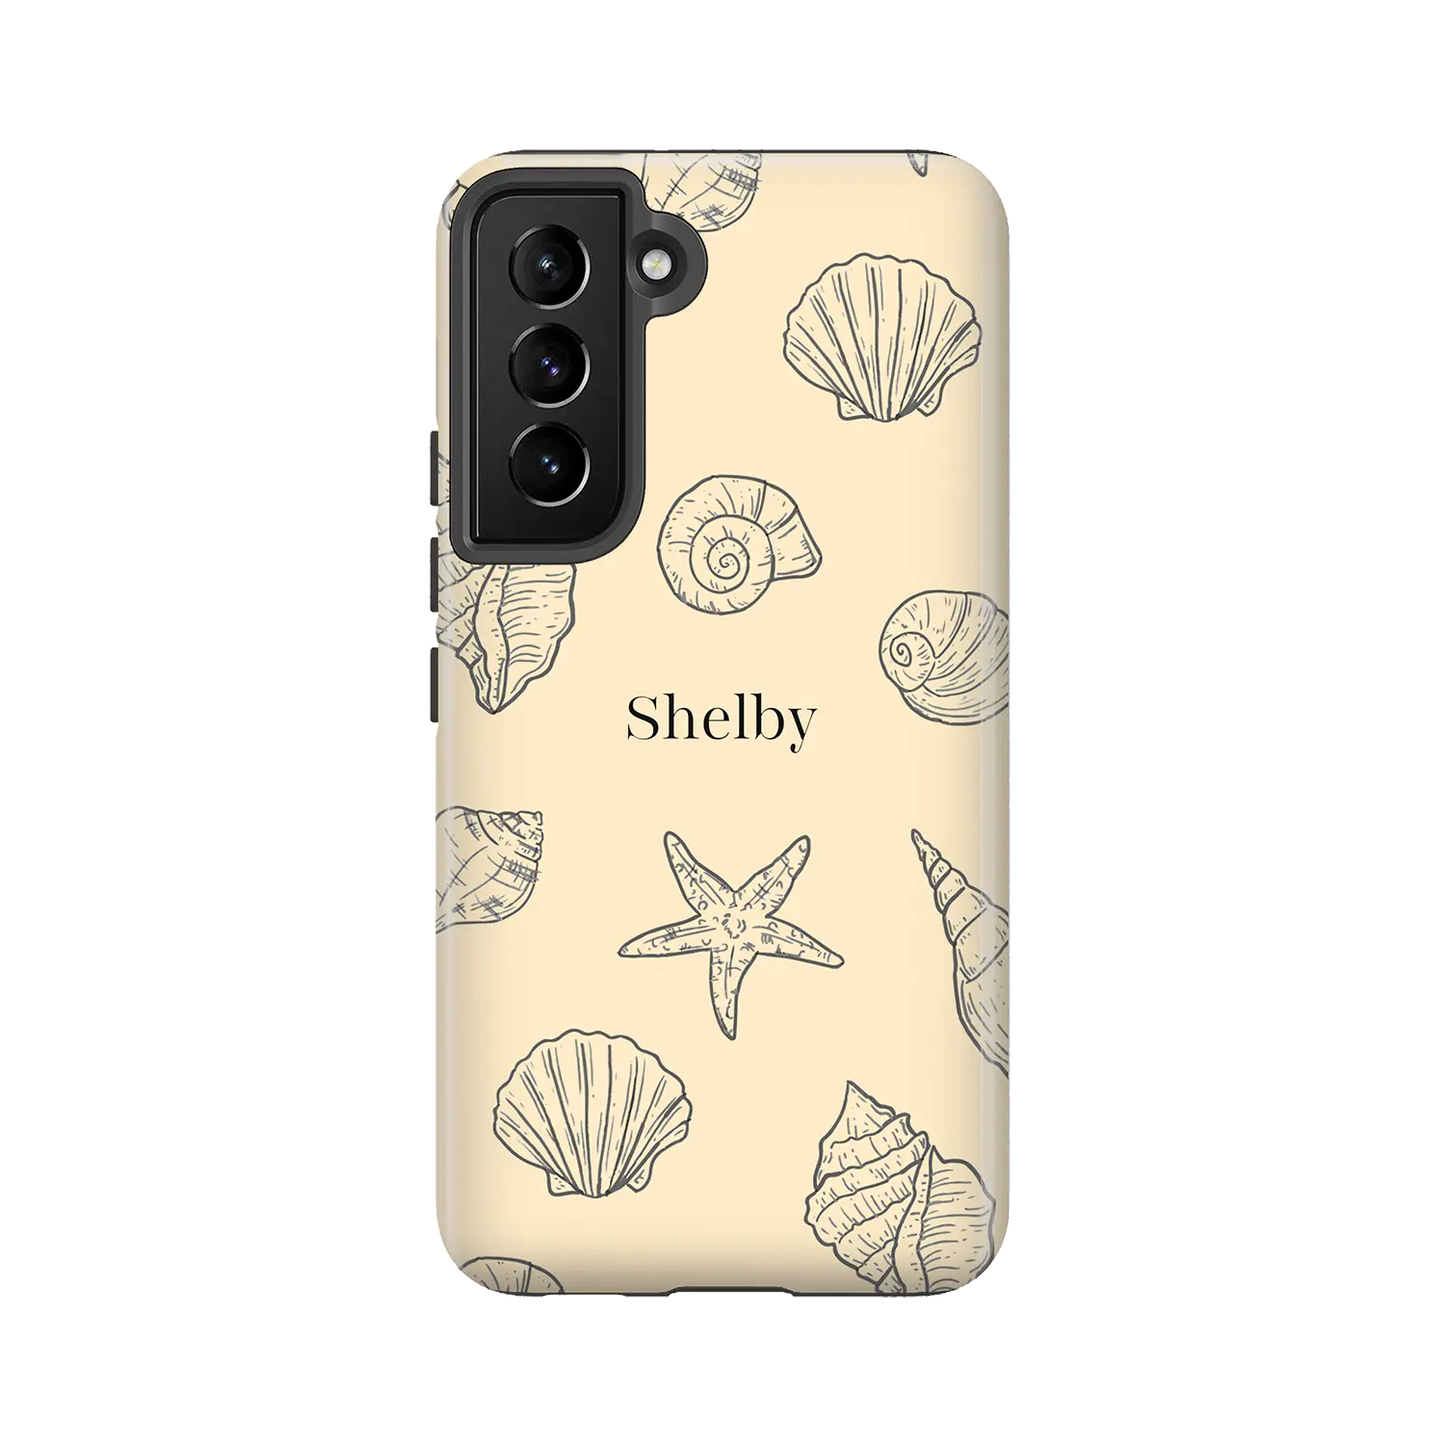 Seashells - Personalised Galaxy S Case